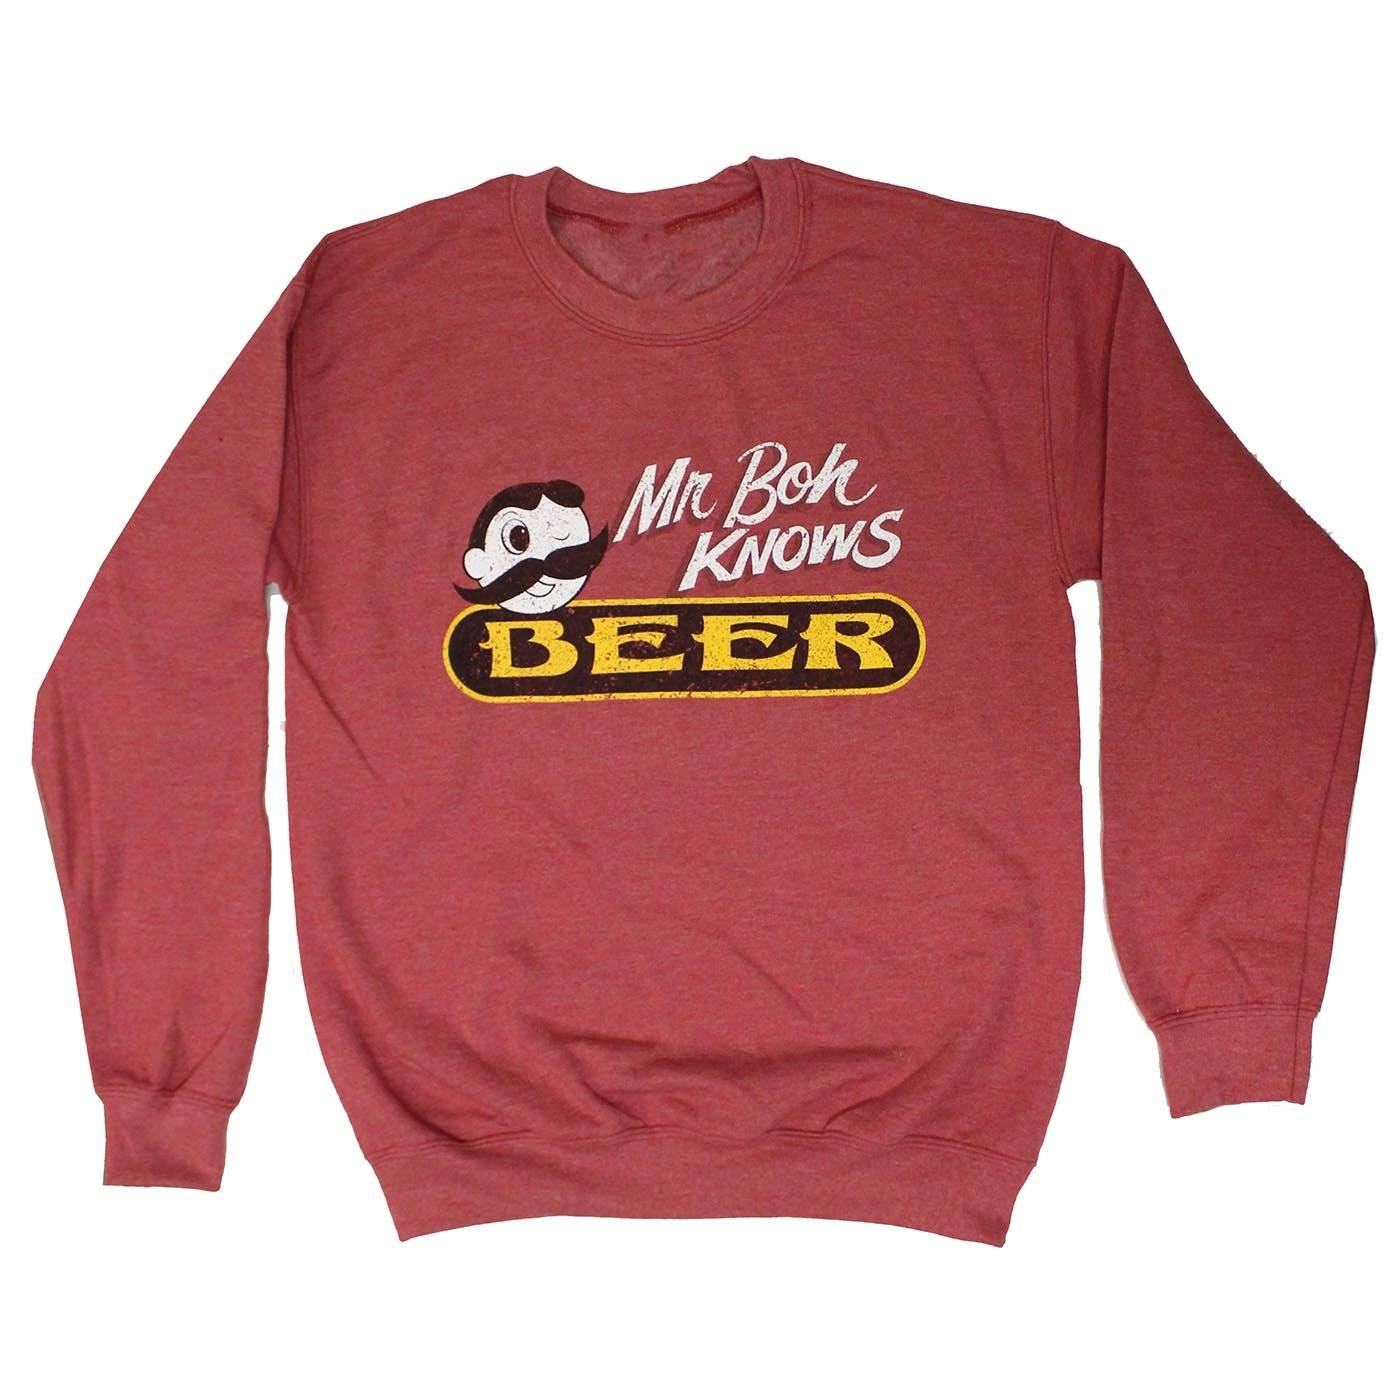 Mr. Boh Knows Beer (Heather Sport Scarlet) / Crew Sweatshirt - Route One Apparel